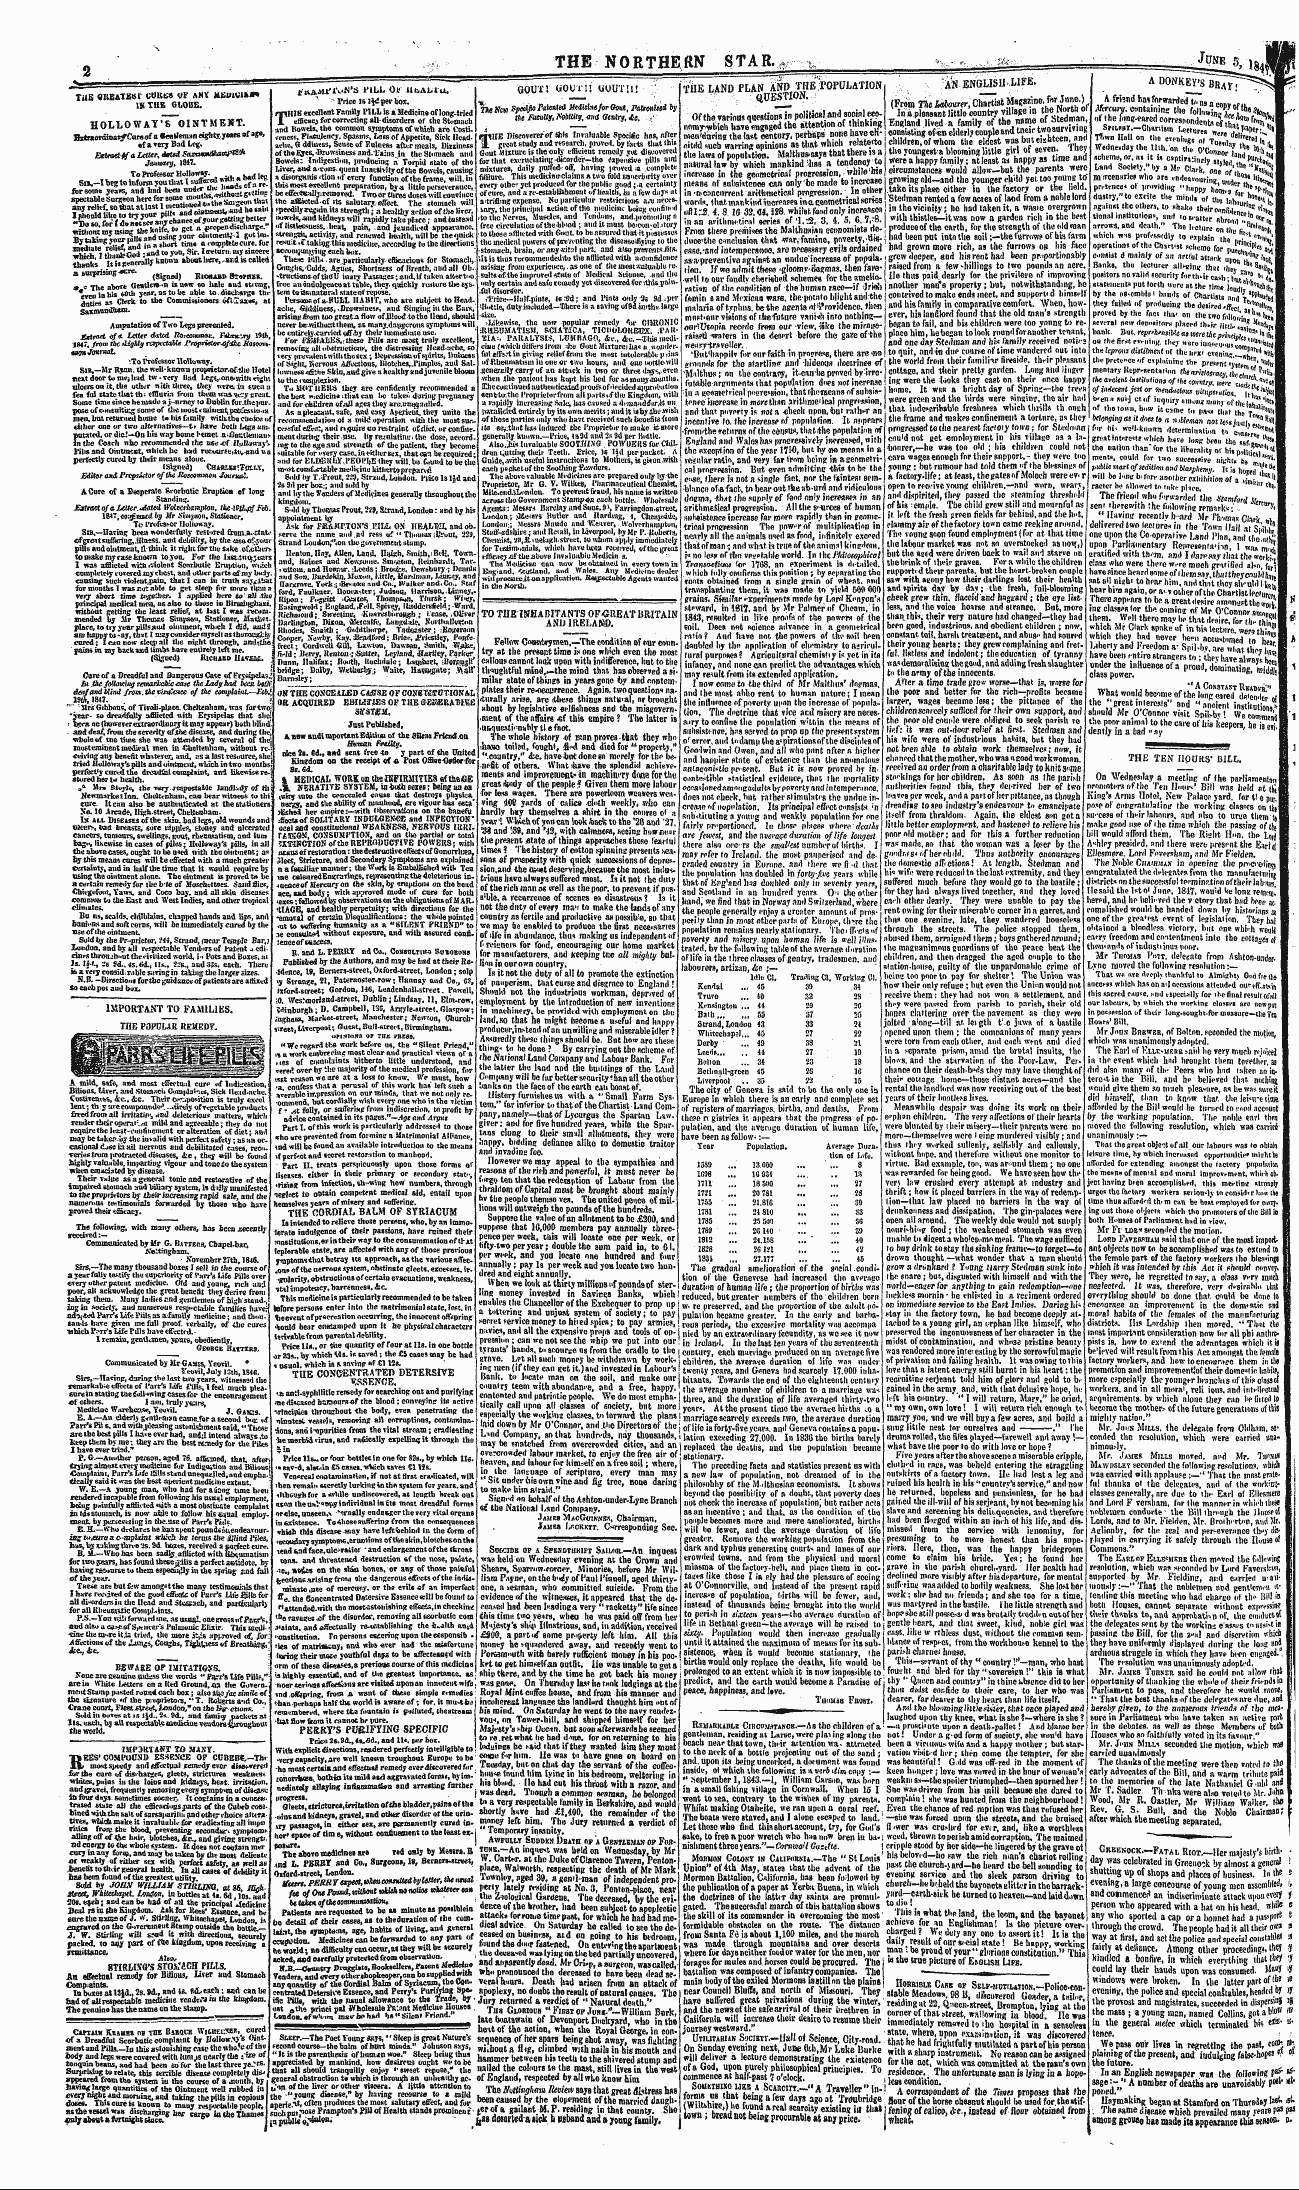 Northern Star (1837-1852): jS F Y, 2nd edition - Tub Gbeatesr Corks Vf A«Y Jibulvlkjn Intus Globe.